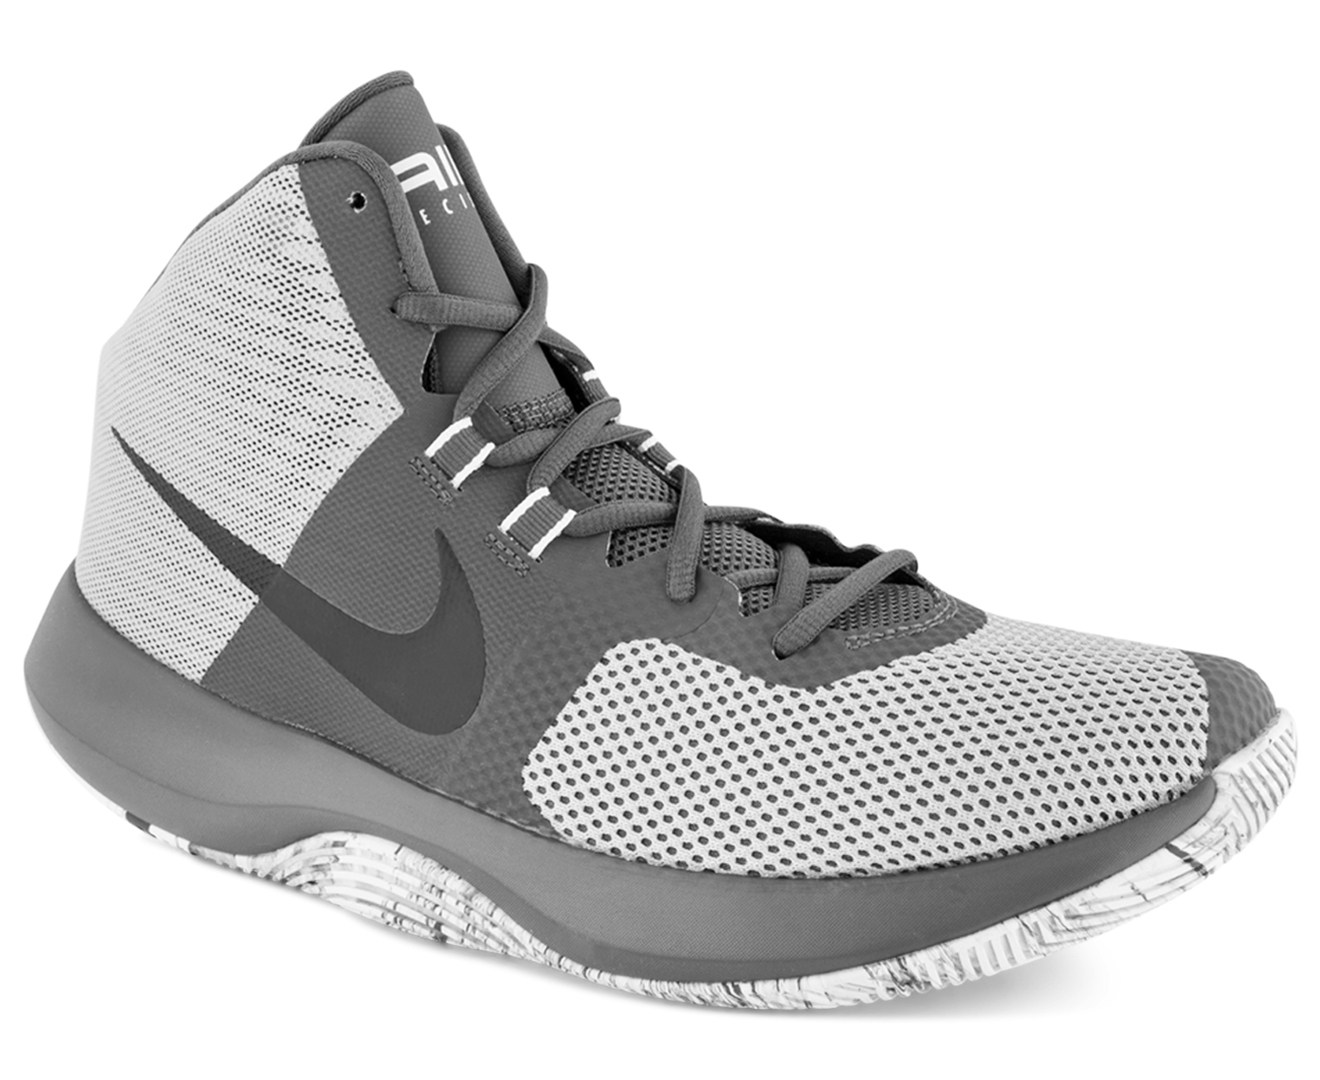 Nike Men's Air Precision Basketball Shoe - Wolf Grey/Black-Dark Grey ...